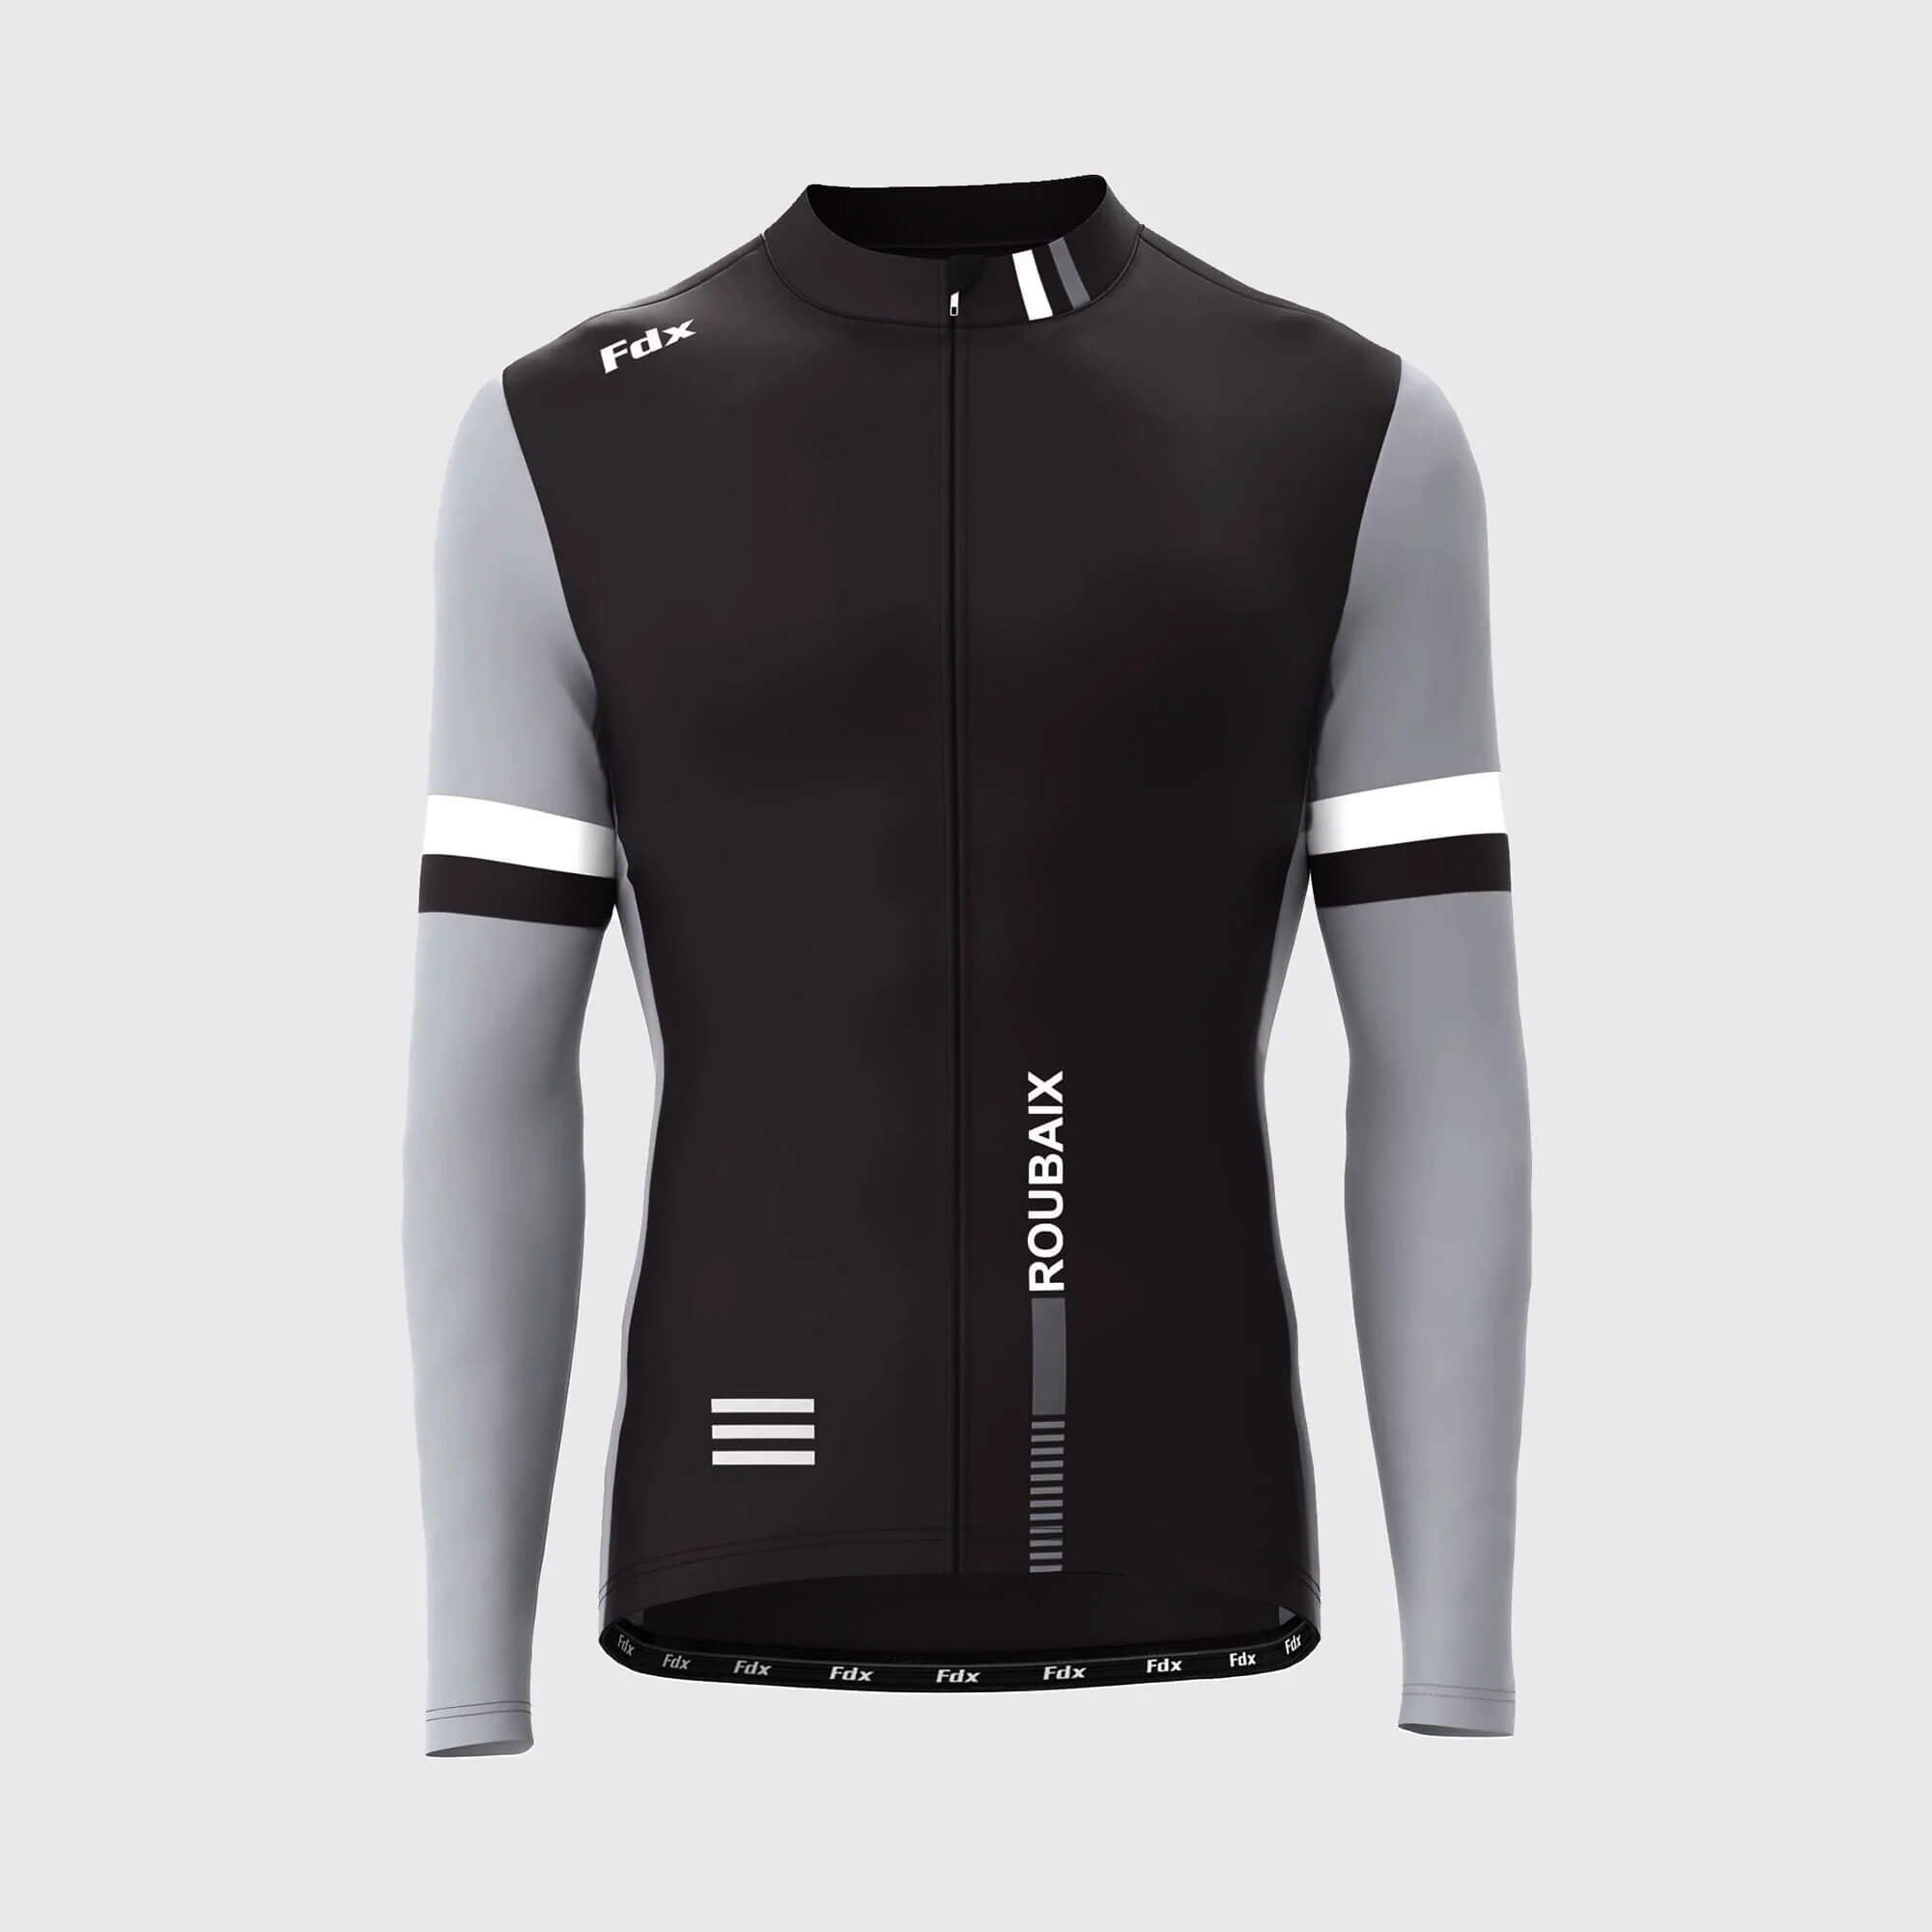 Fdx Men's Black & Grey Long Sleeve Cycling Jersey for Winter Roubaix Thermal Fleece Road Bike Wear Top Full Zipper, Pockets & Hi viz Reflectors - Limited Edition